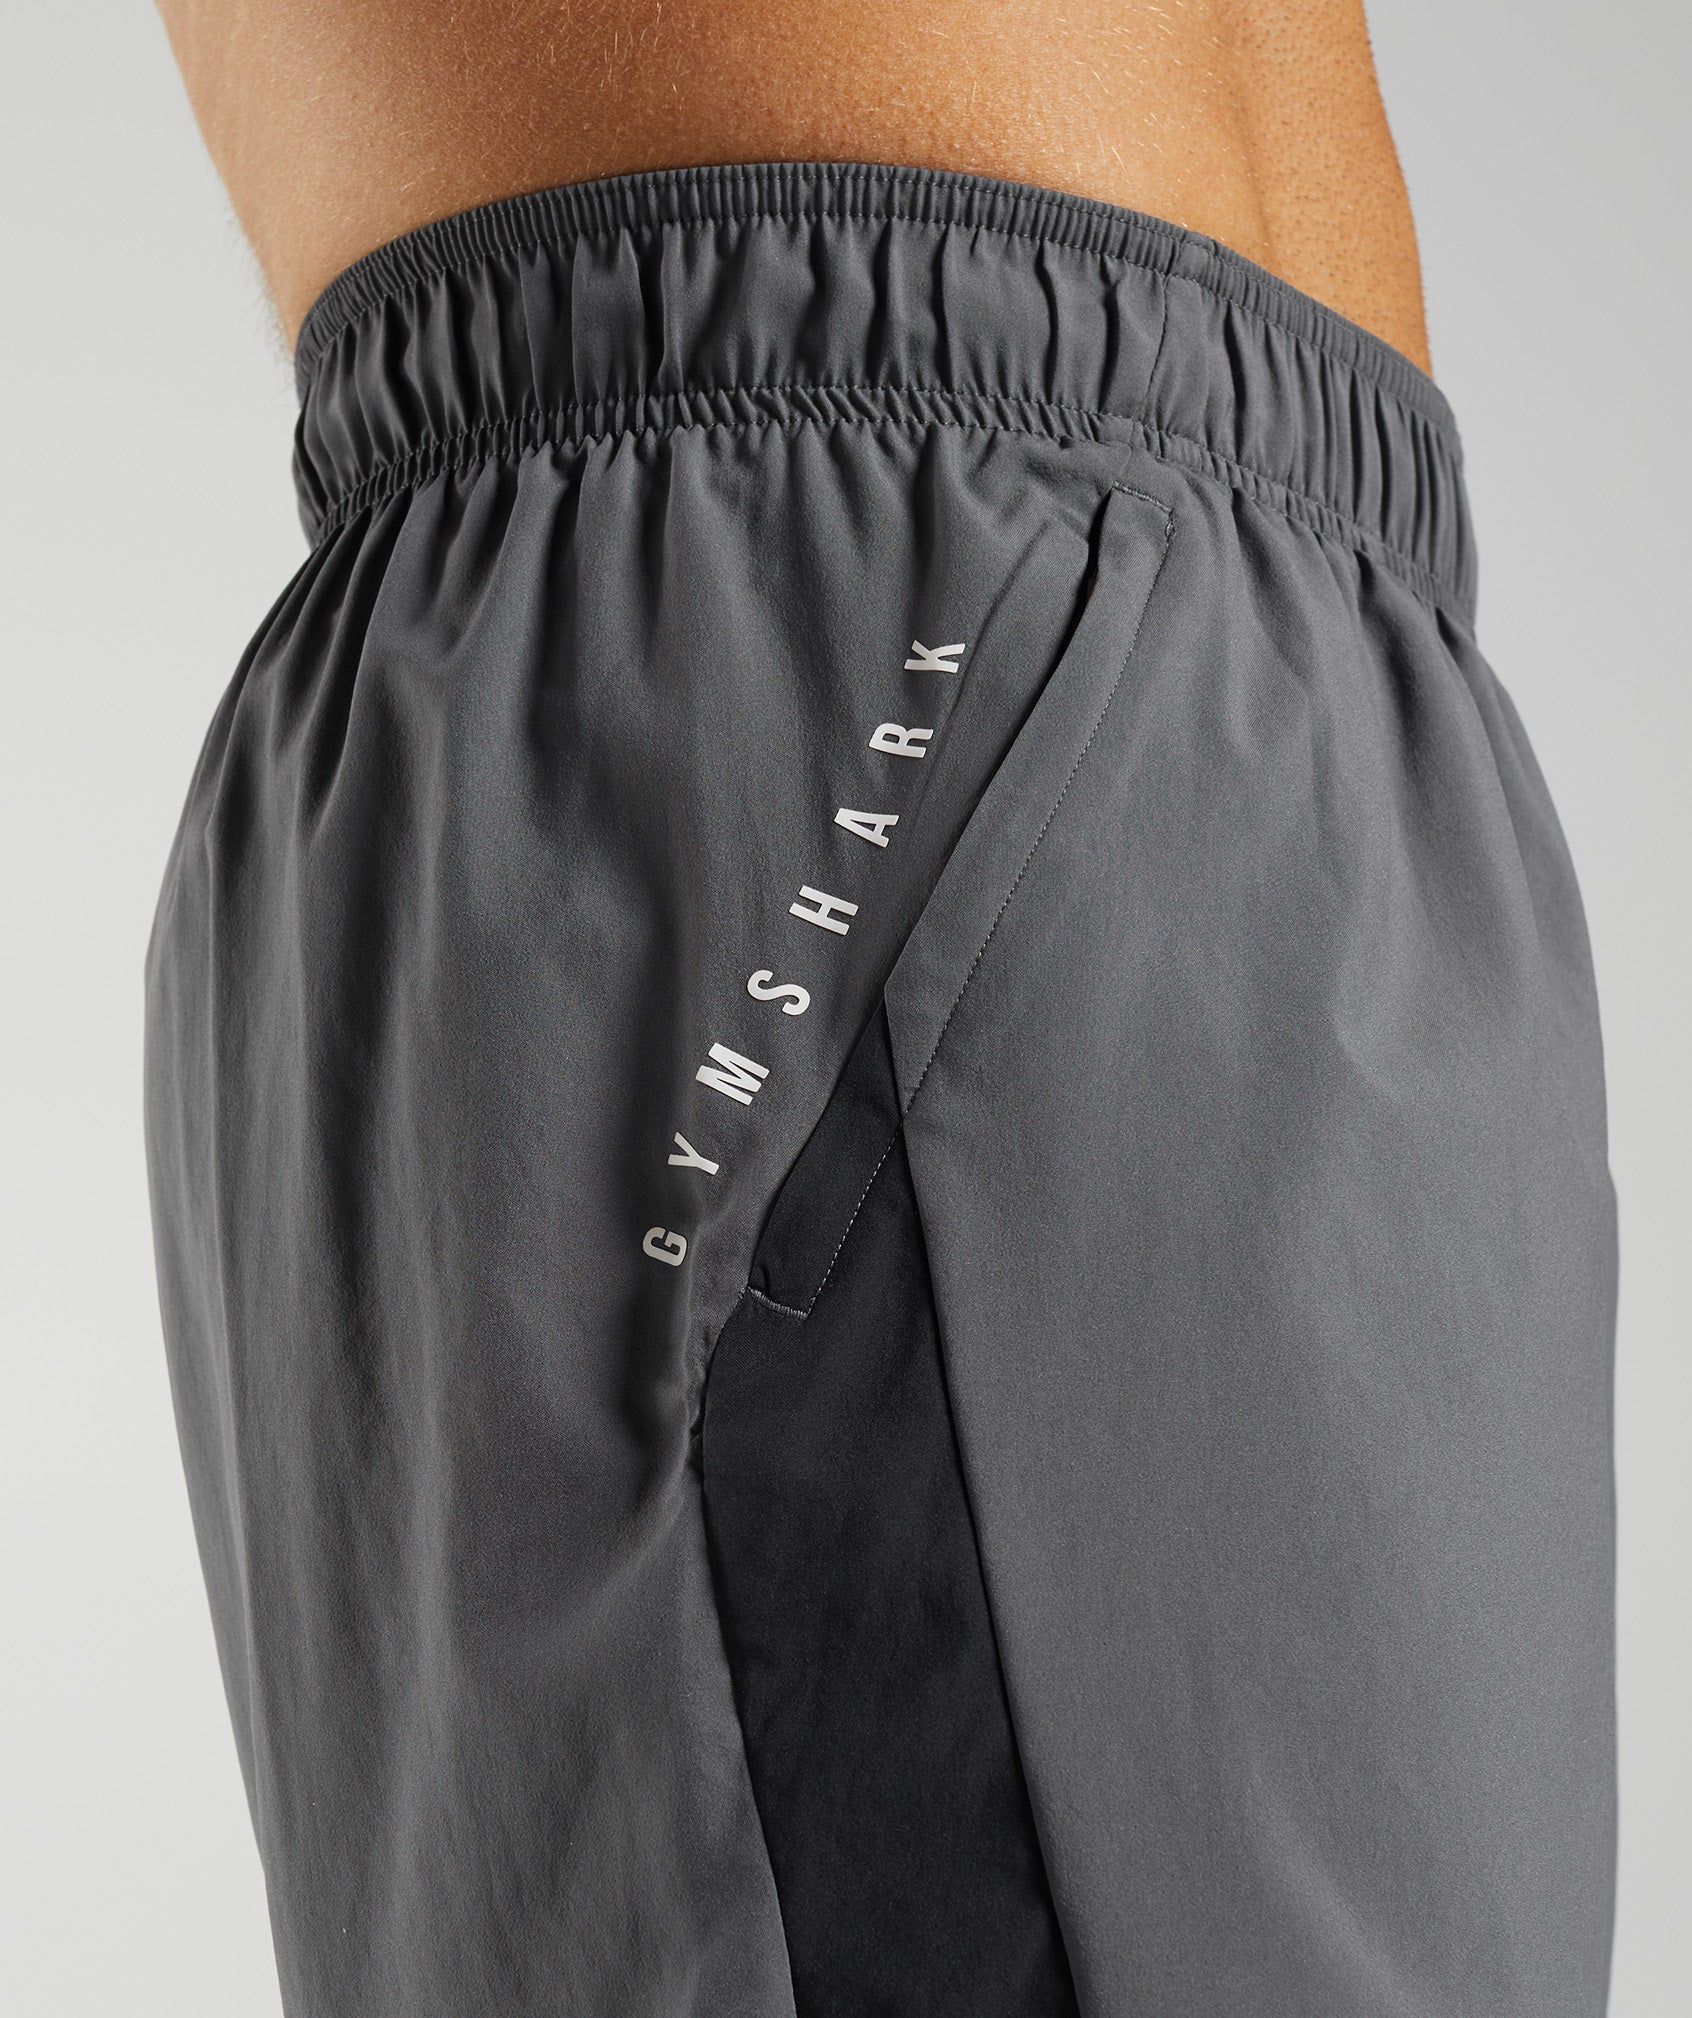 Sport Shorts in Silhouette Grey/Black